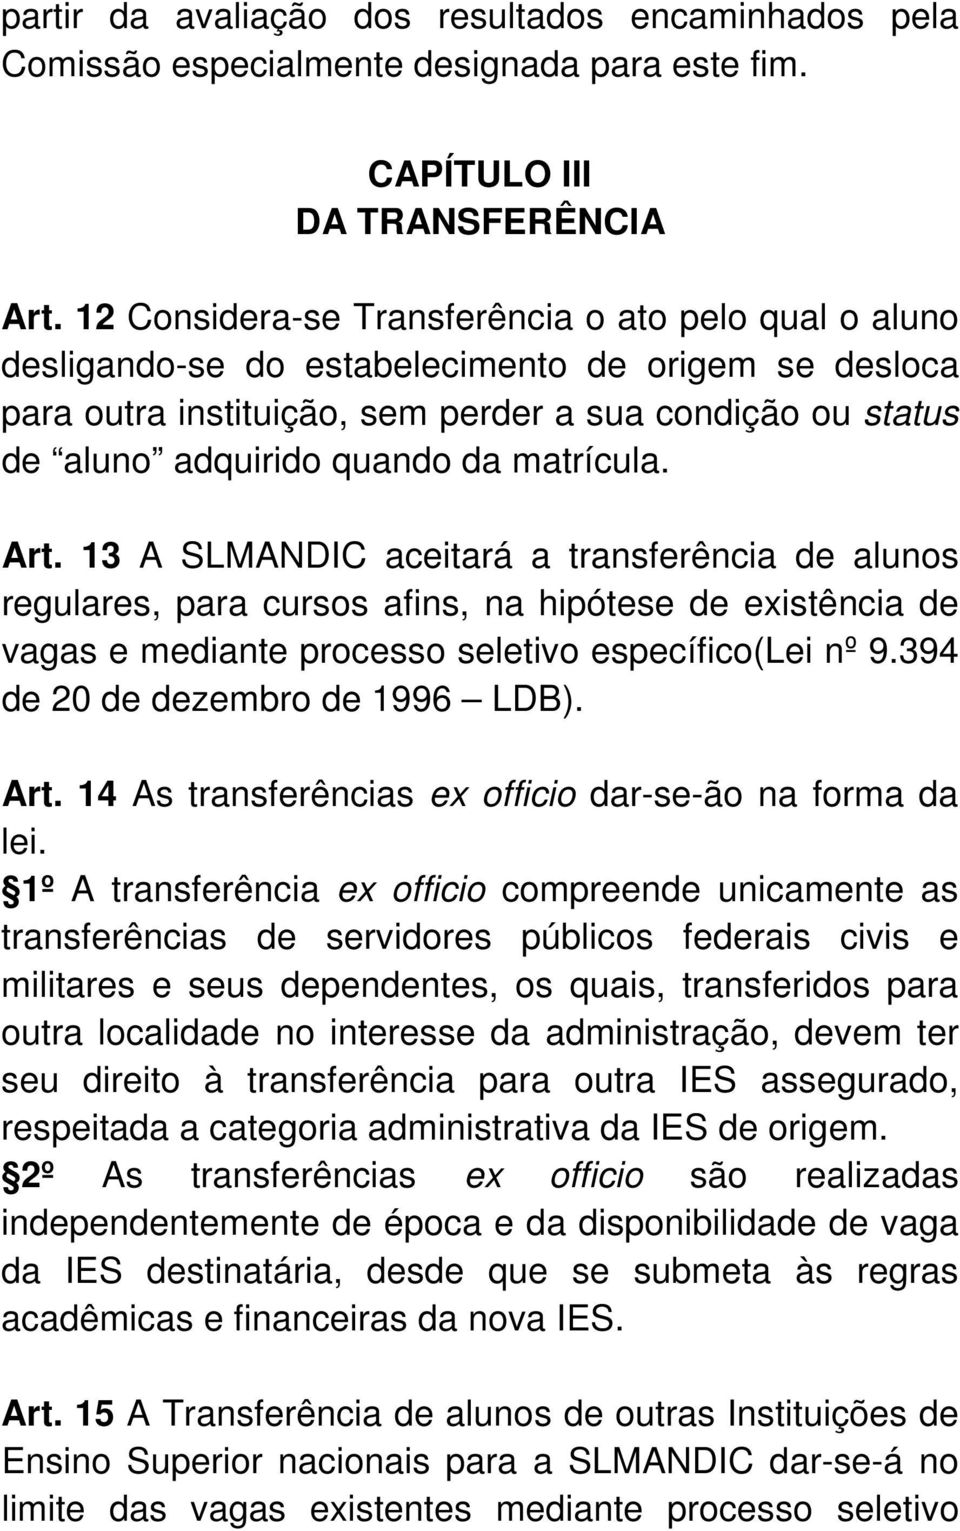 matrícula. Art. 13 A SLMANDIC aceitará a transferência de alunos regulares, para cursos afins, na hipótese de existência de vagas e mediante processo seletivo específico(lei nº 9.